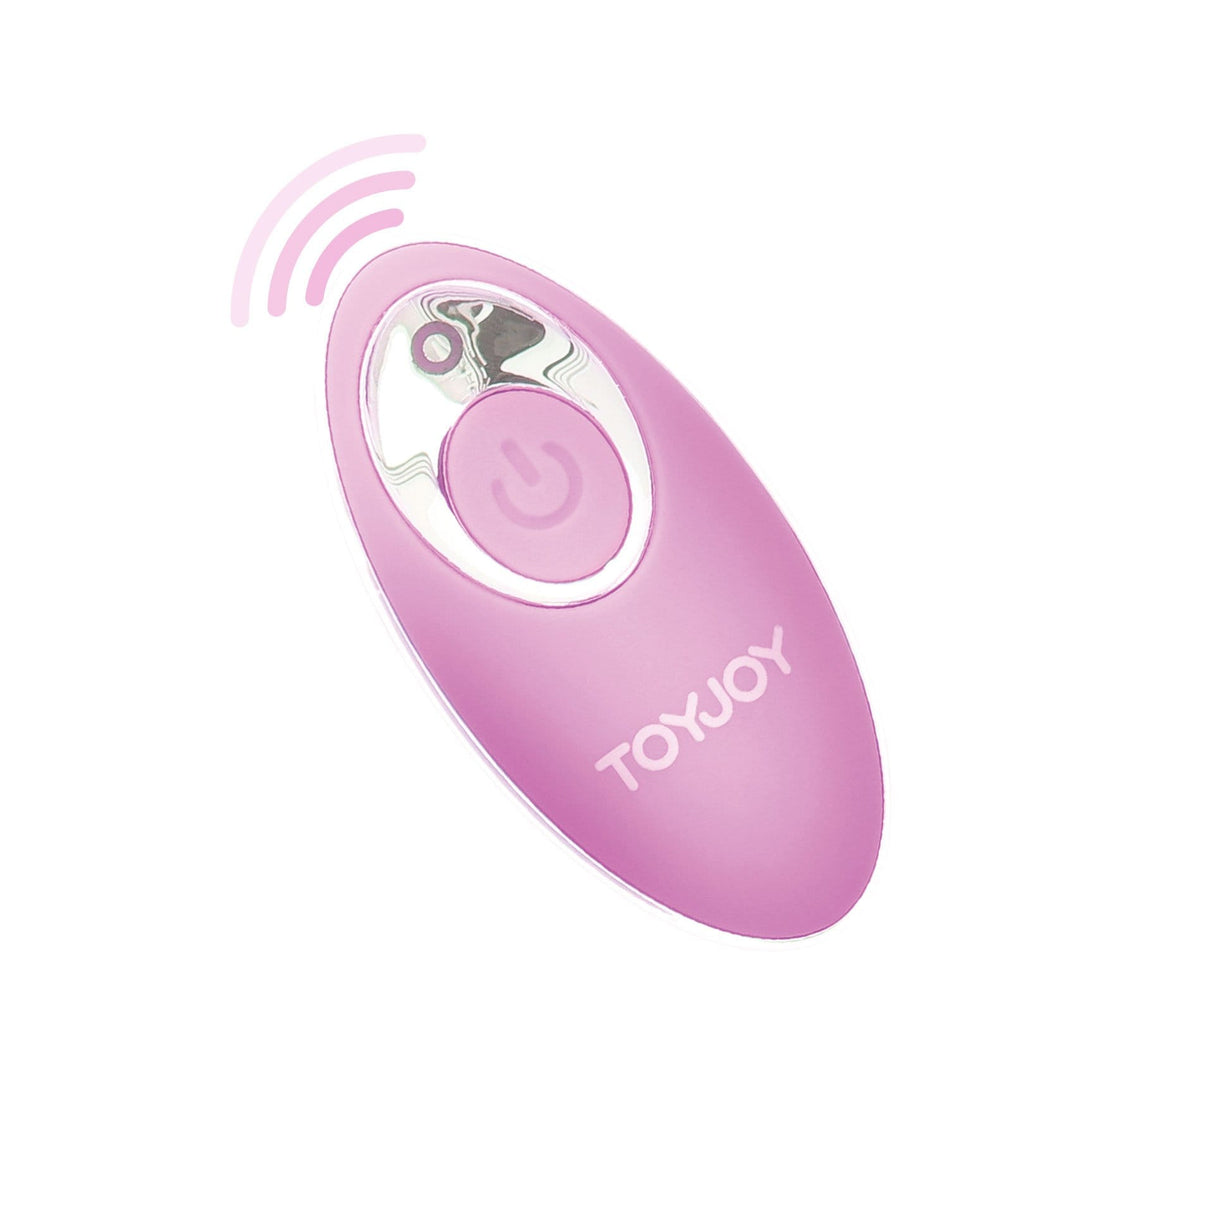 ToyJoy - You Crack Me Up Remote Control Egg Vibrator (Pink) TJ1078 CherryAffairs